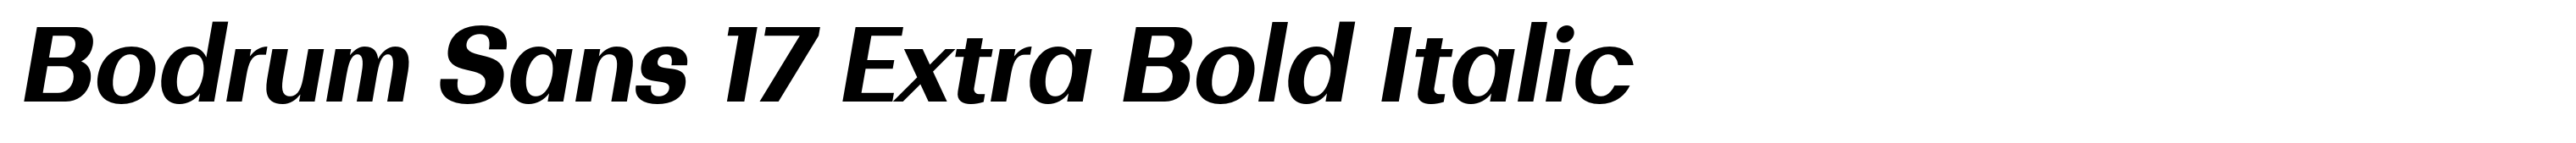 Bodrum Sans 17 Extra Bold Italic